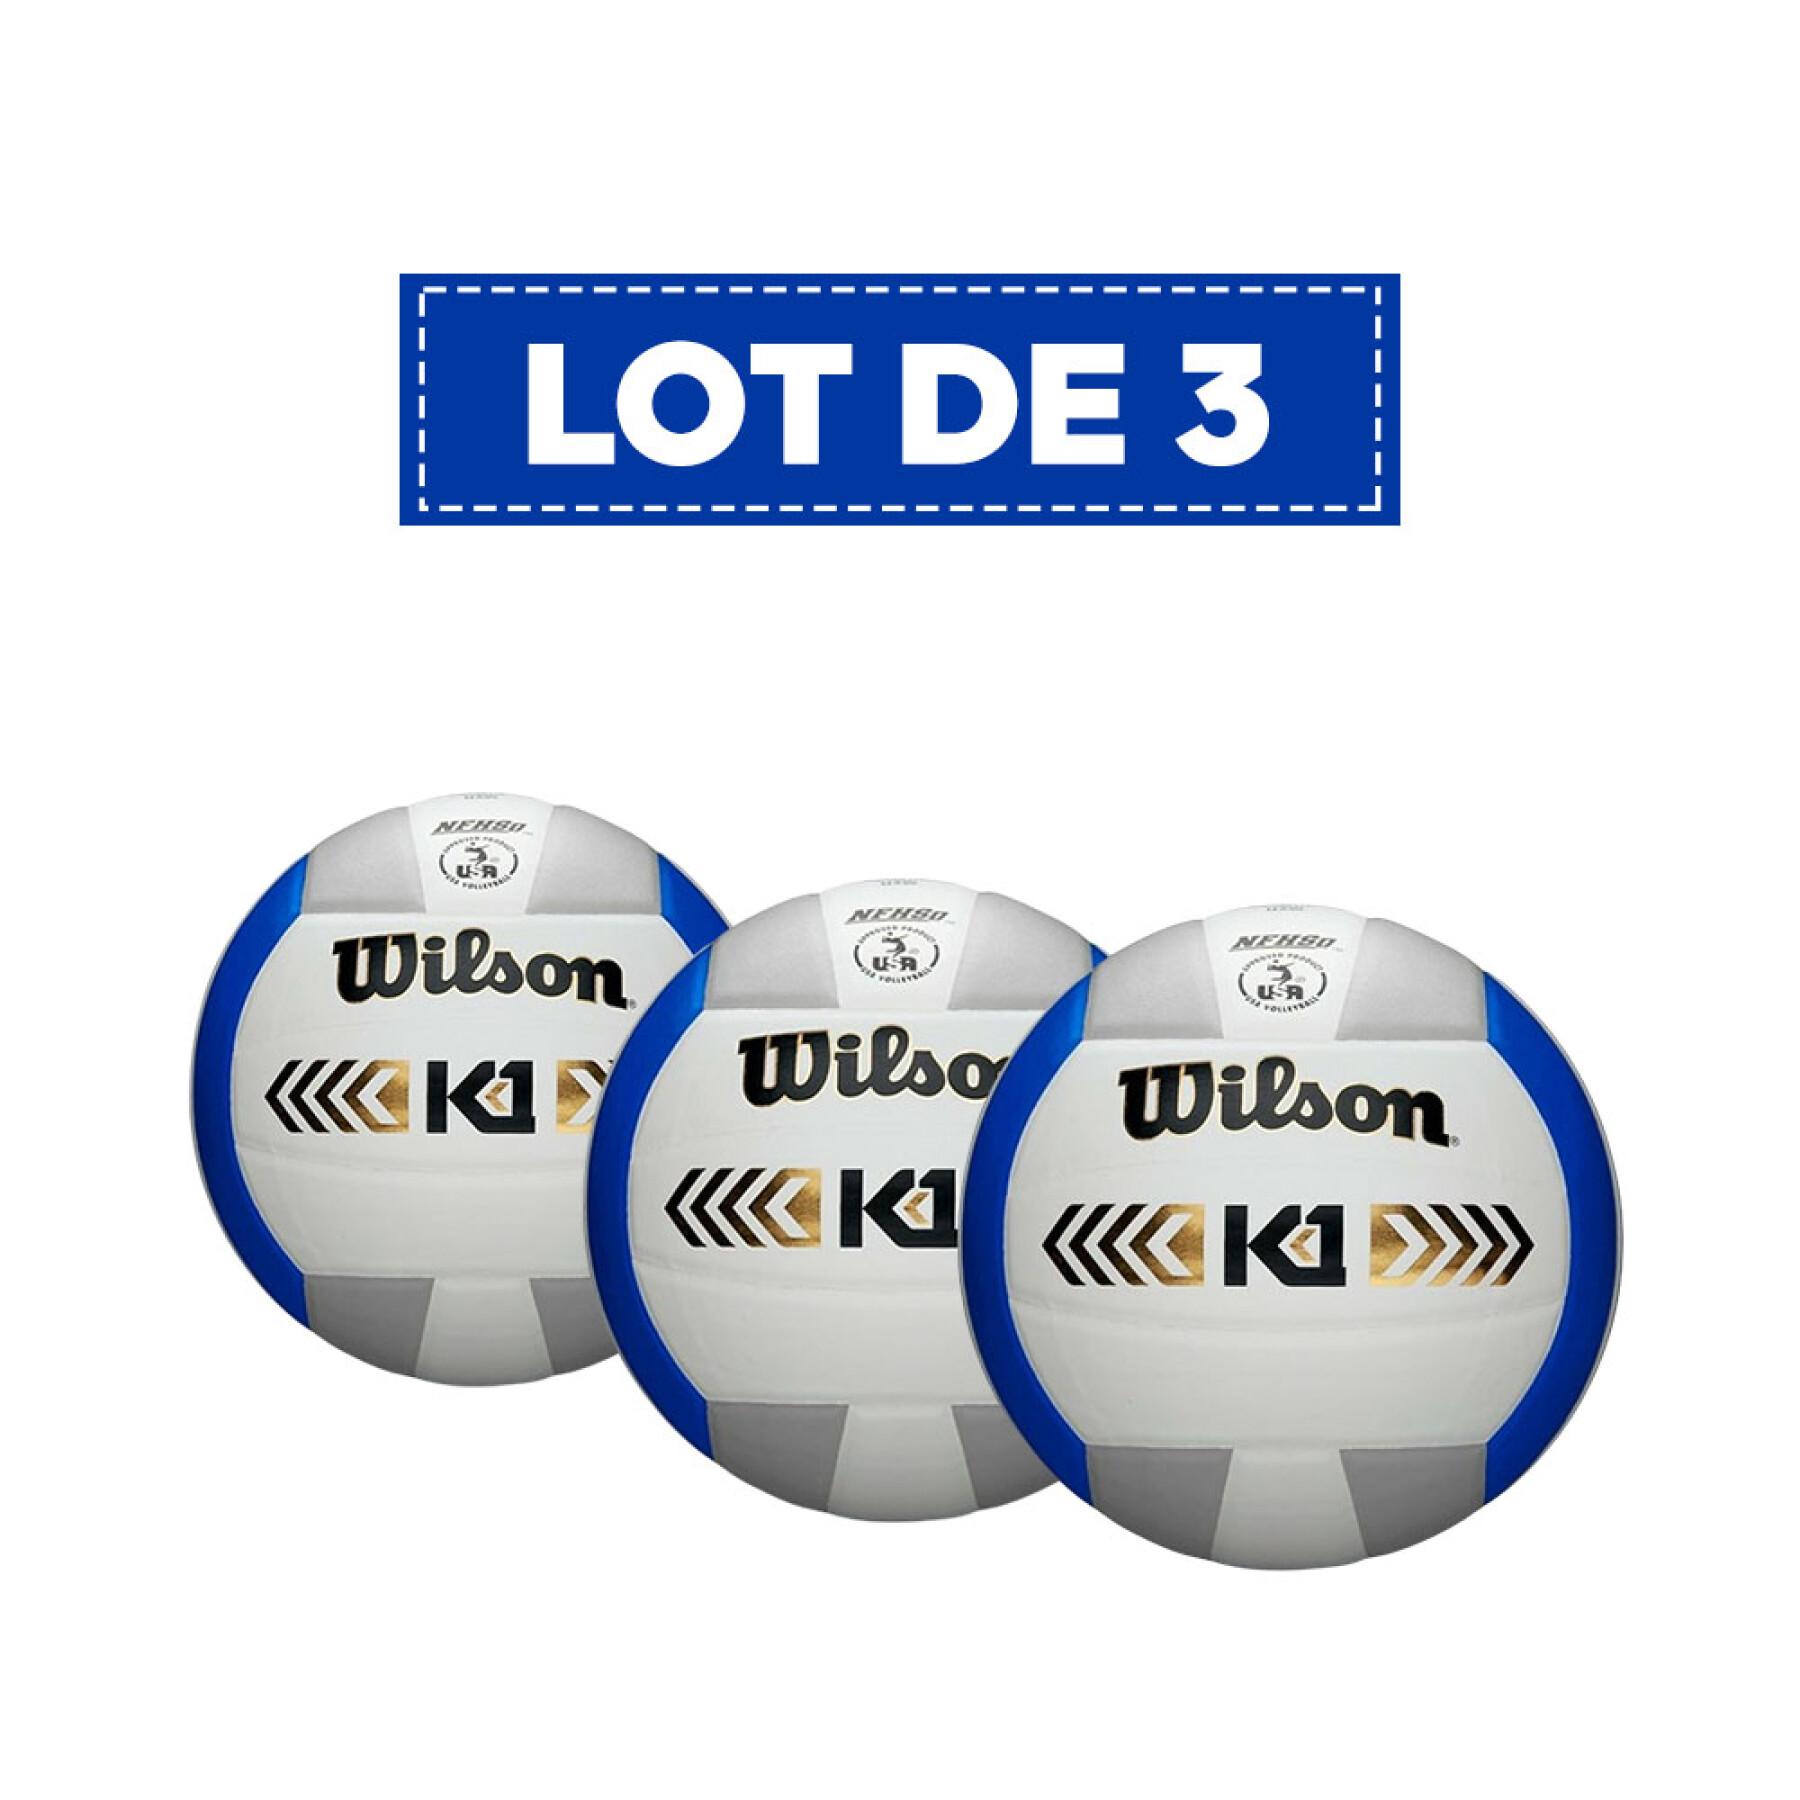 Juego de 3 balones de voleibol Wilson K1 Gold [Taille 5]